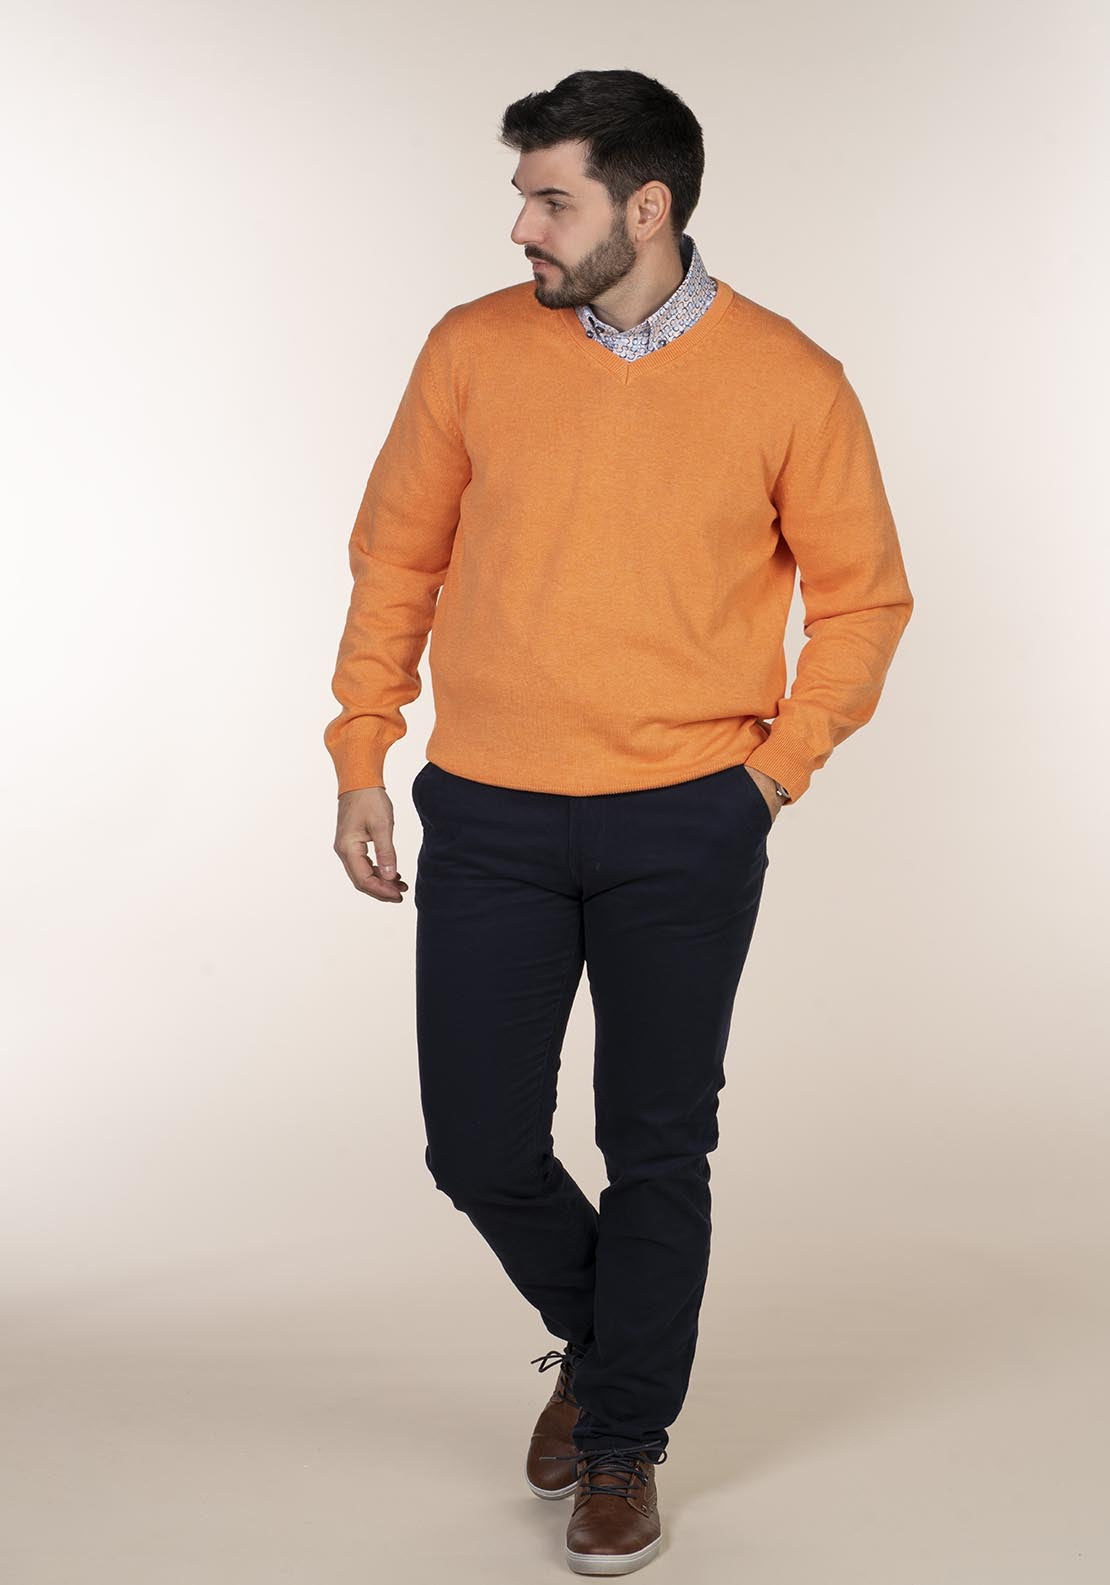 Yeats Plain Cotton V Neck Sweaters Orange 3 Shaws Department Stores